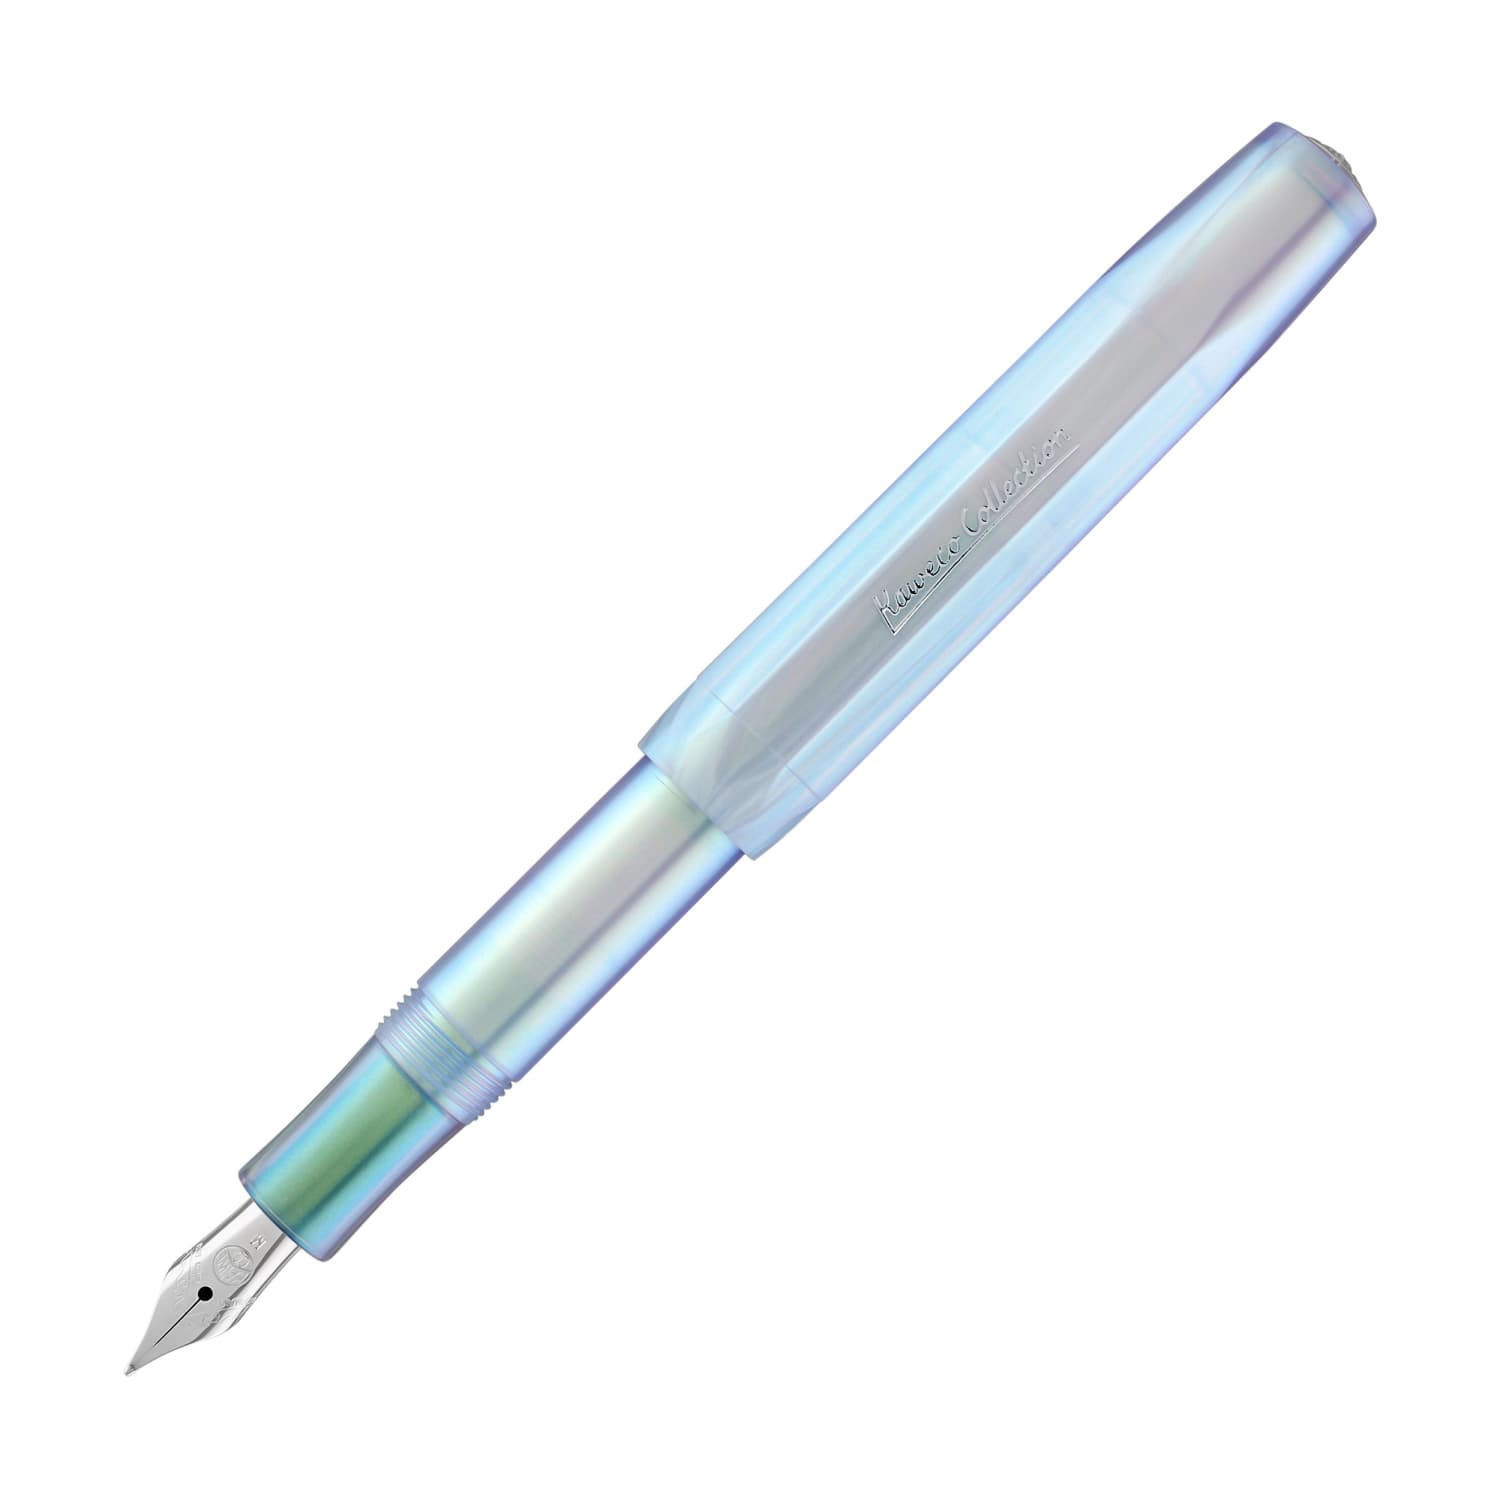 Fountain pen, Kaweco Classic, medium